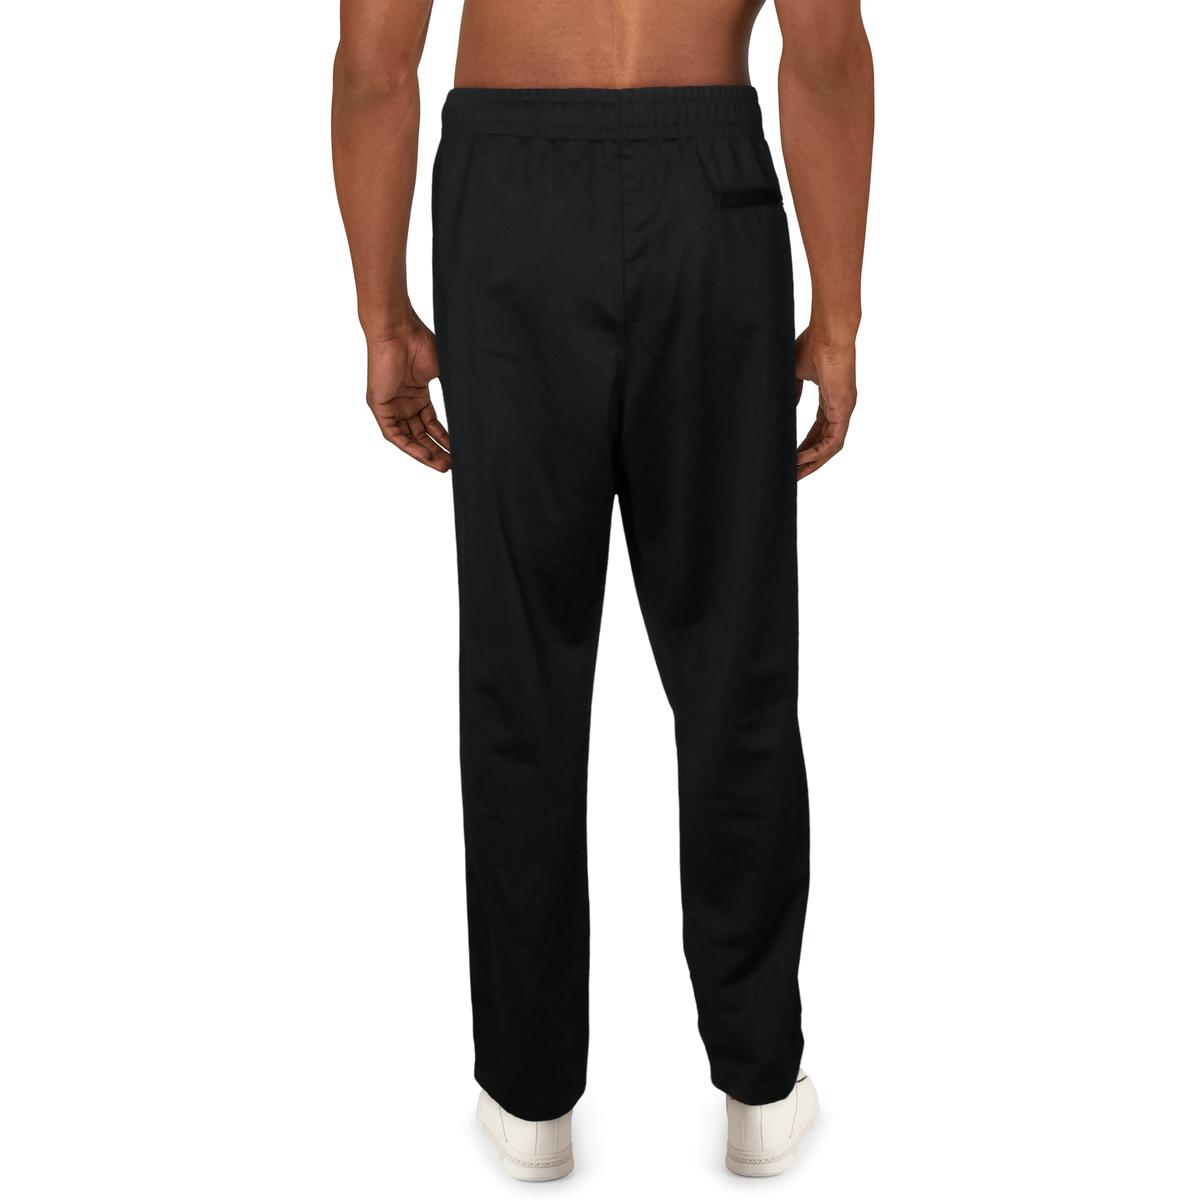 Fila Mens Italia Sweatpants Fitness Activewear Track Pants Athletic ...